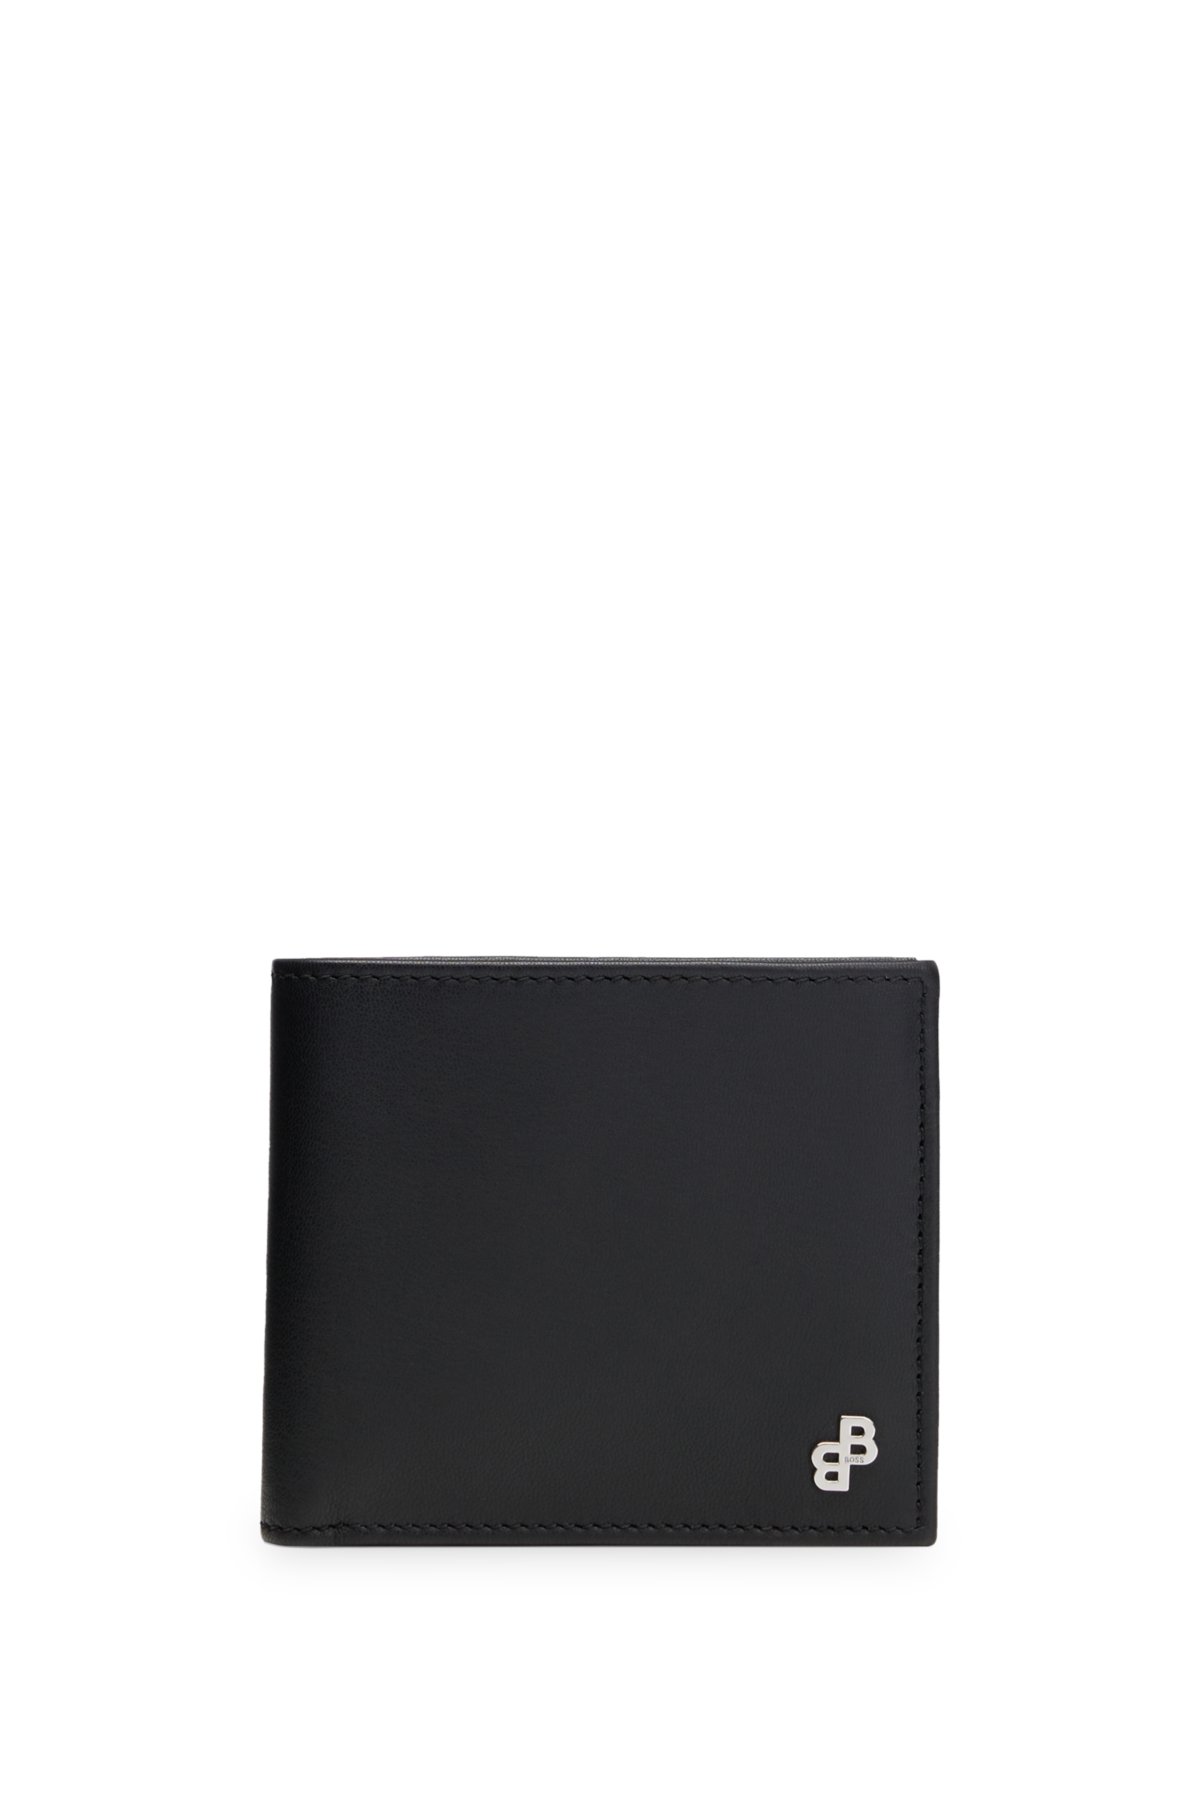 BOSS Matte-leather card holder with monogram hardware trim in Black | Men's Wallets